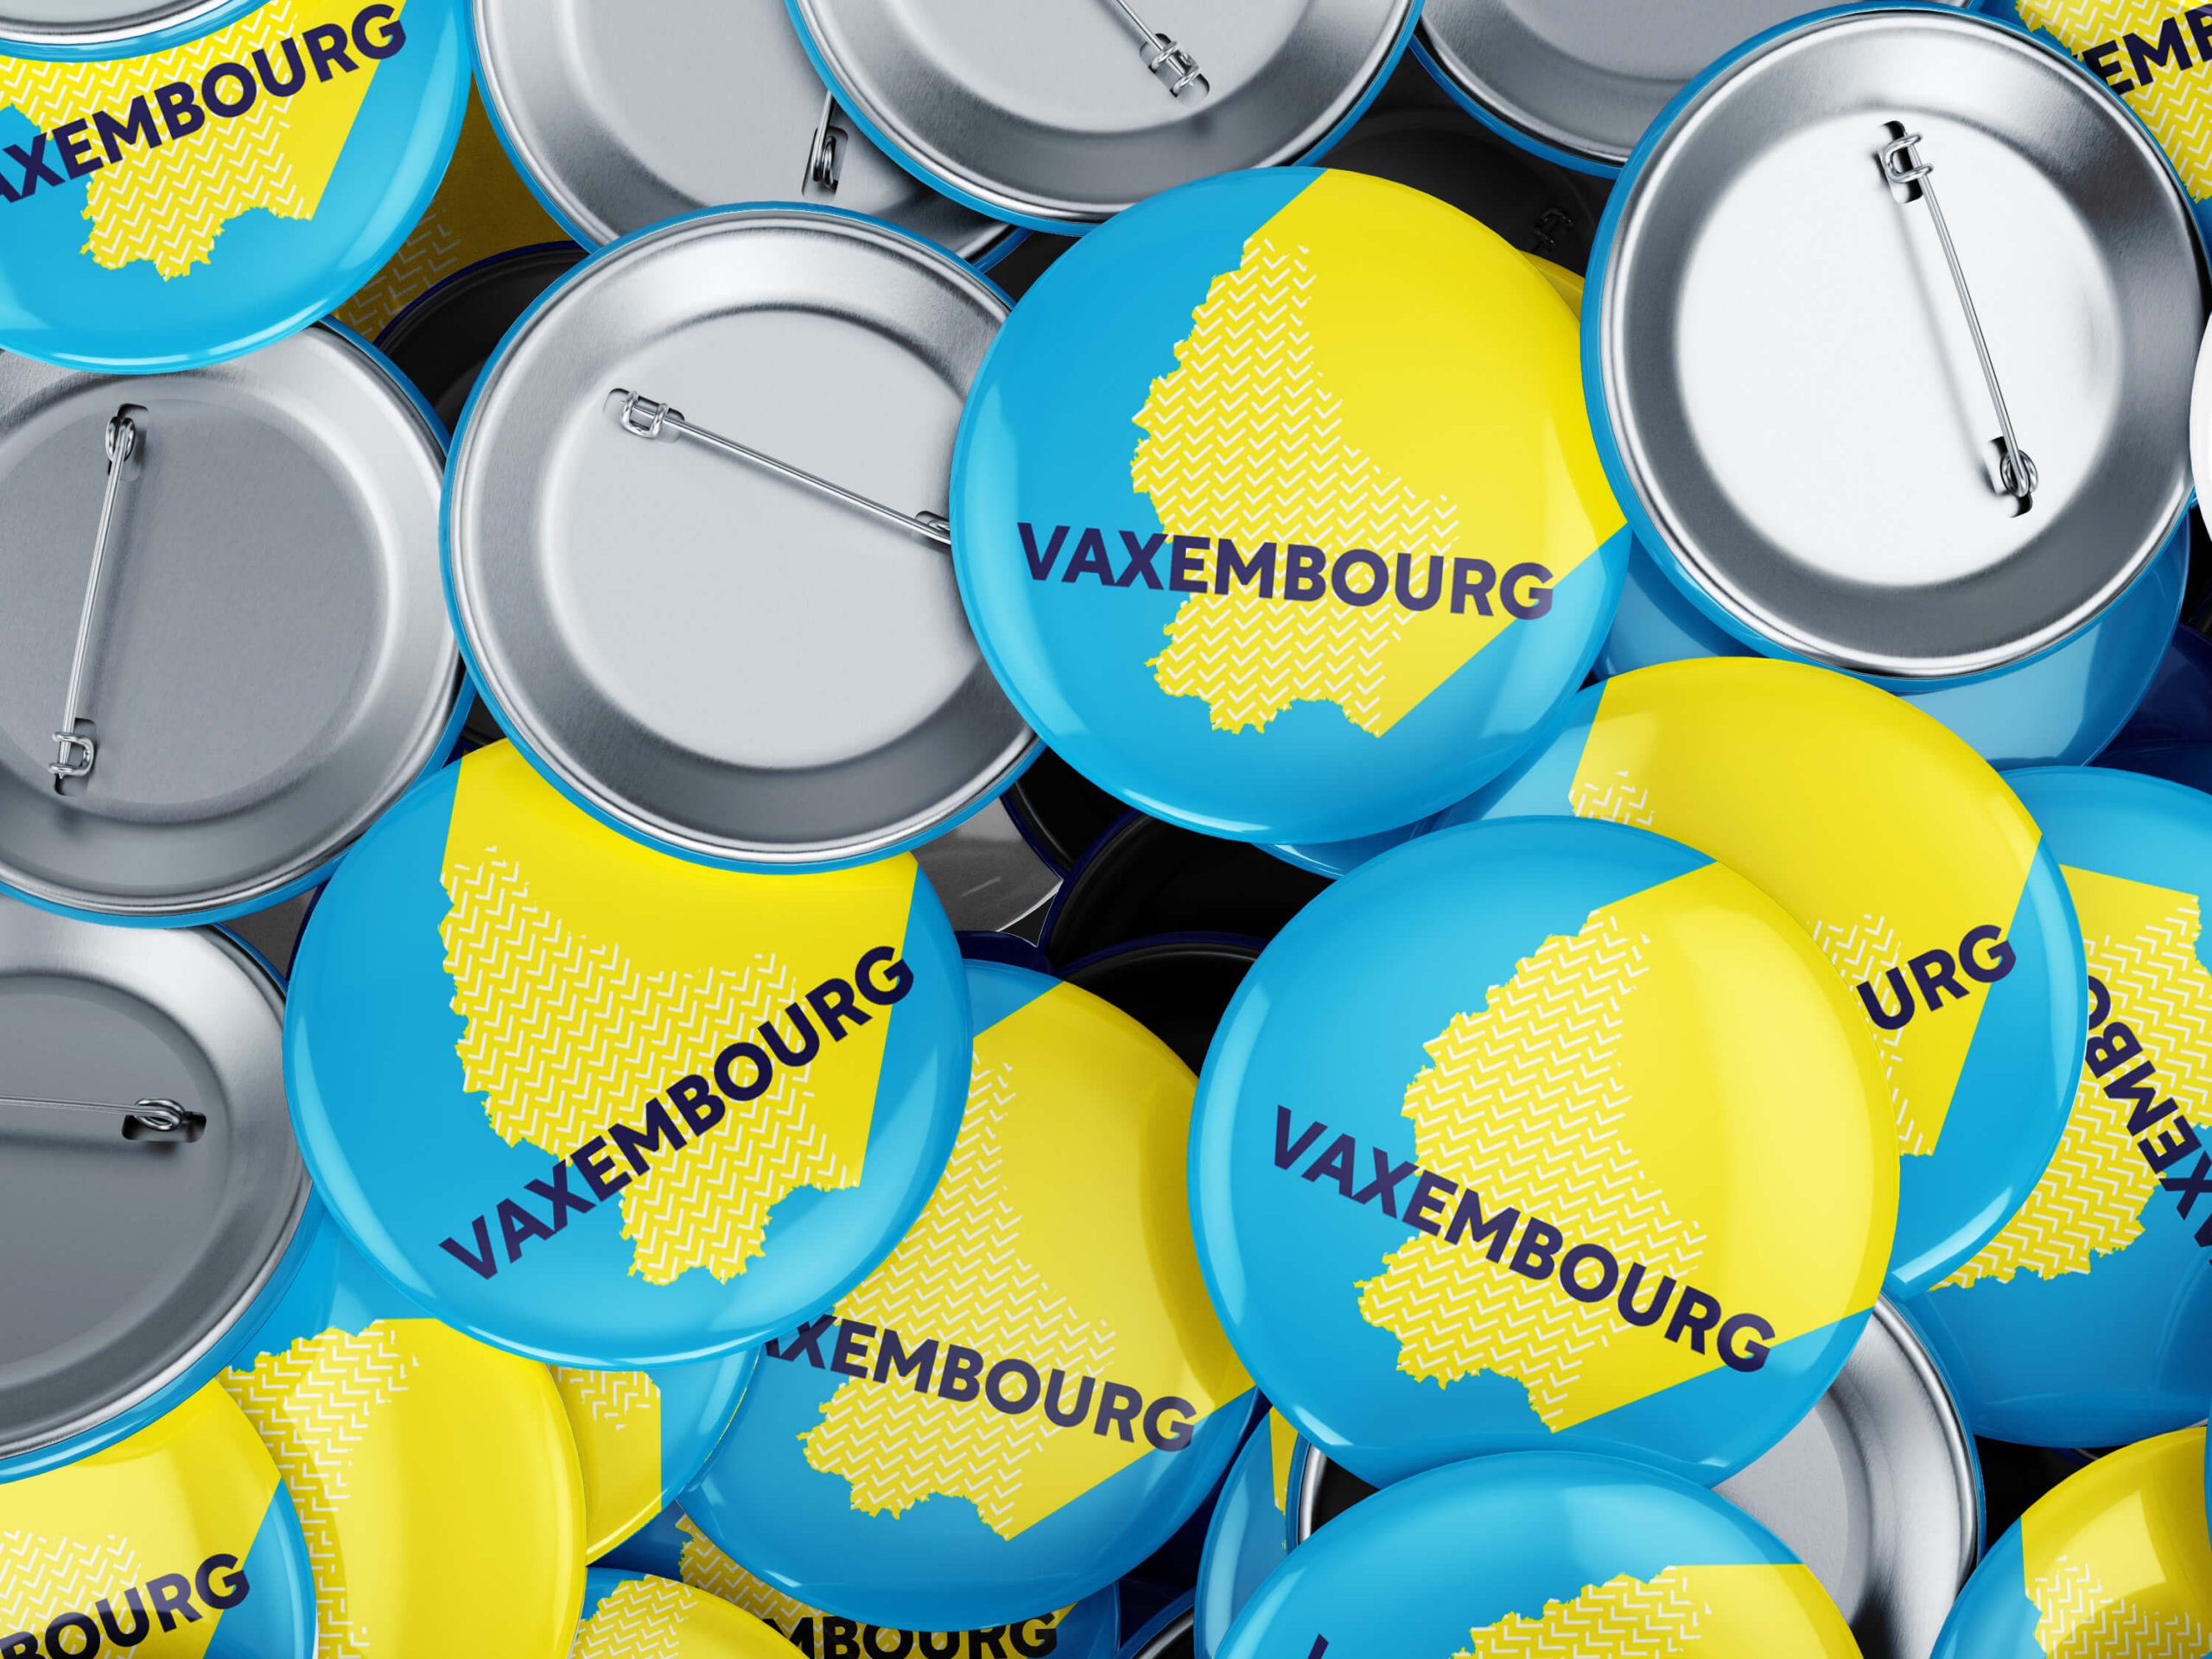 Badge "vaxembourg" encourageant à la vaccination au Luxembourg